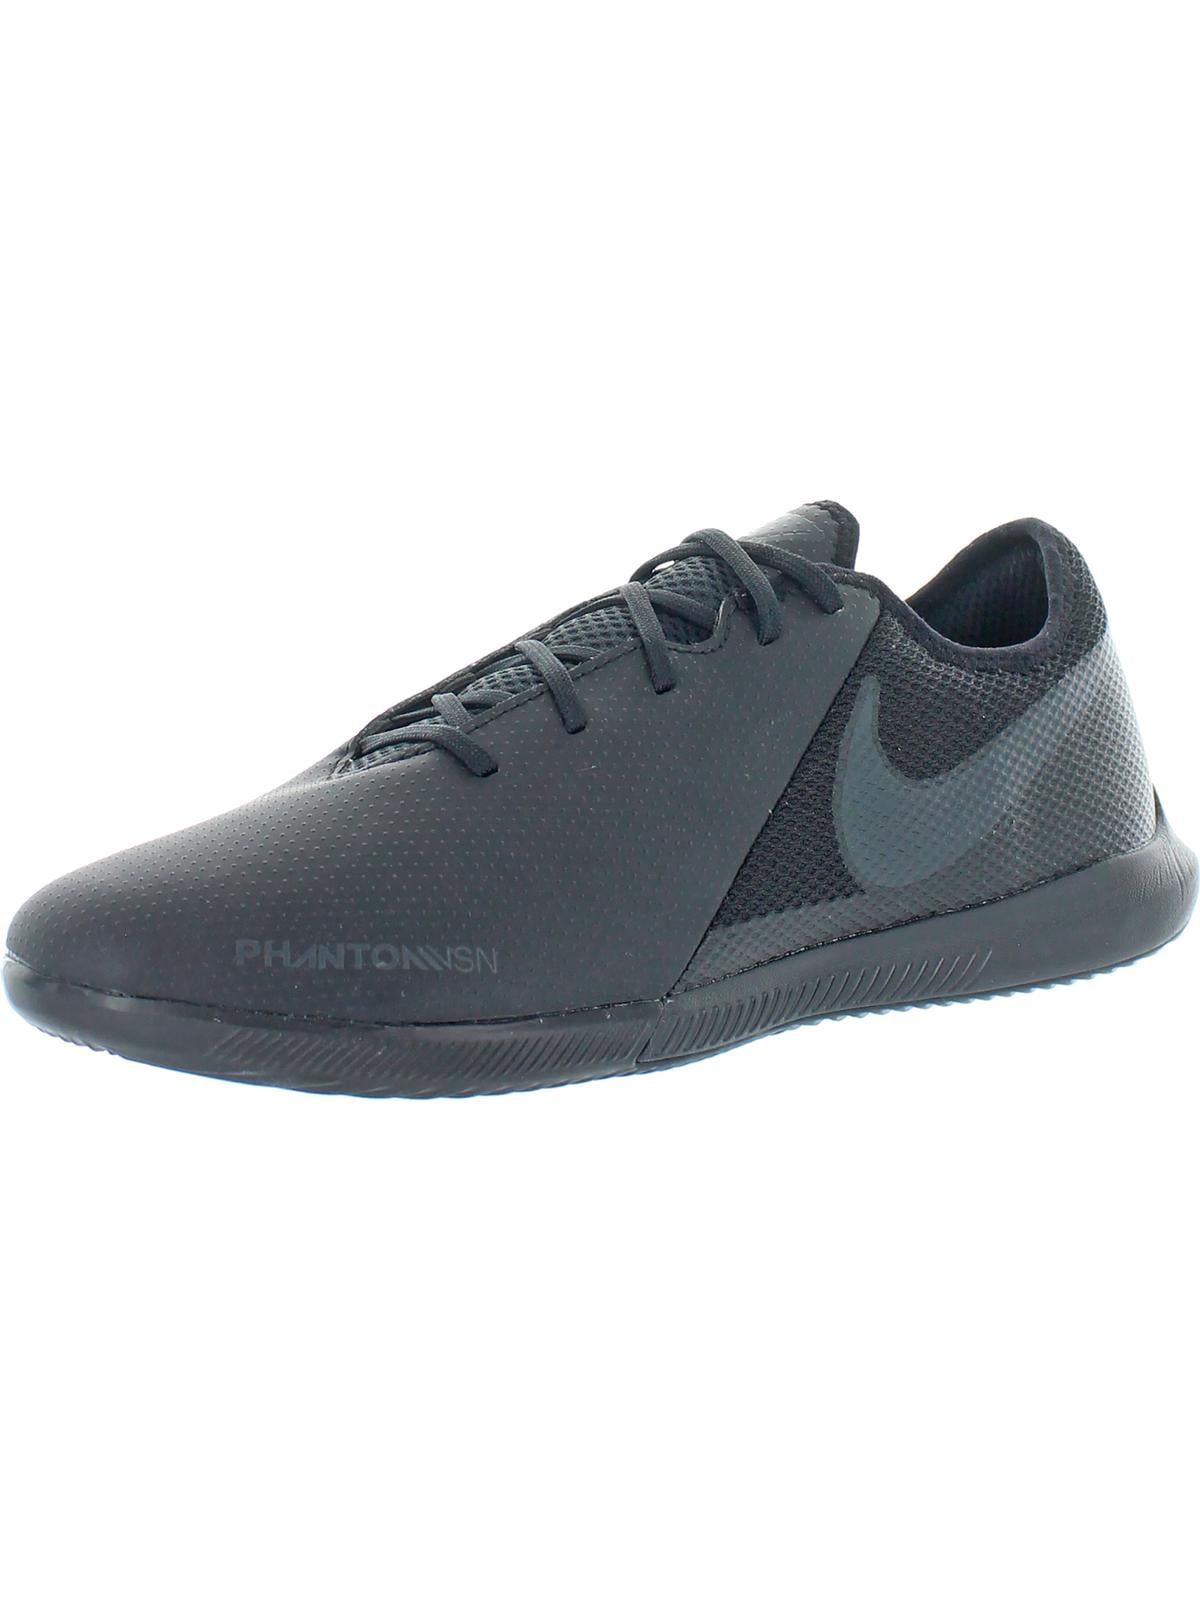 Nike Phantom Vsn Academy Ic Black / Anthracite Ankle-High Leather Sneaker - 9.5M 8M -